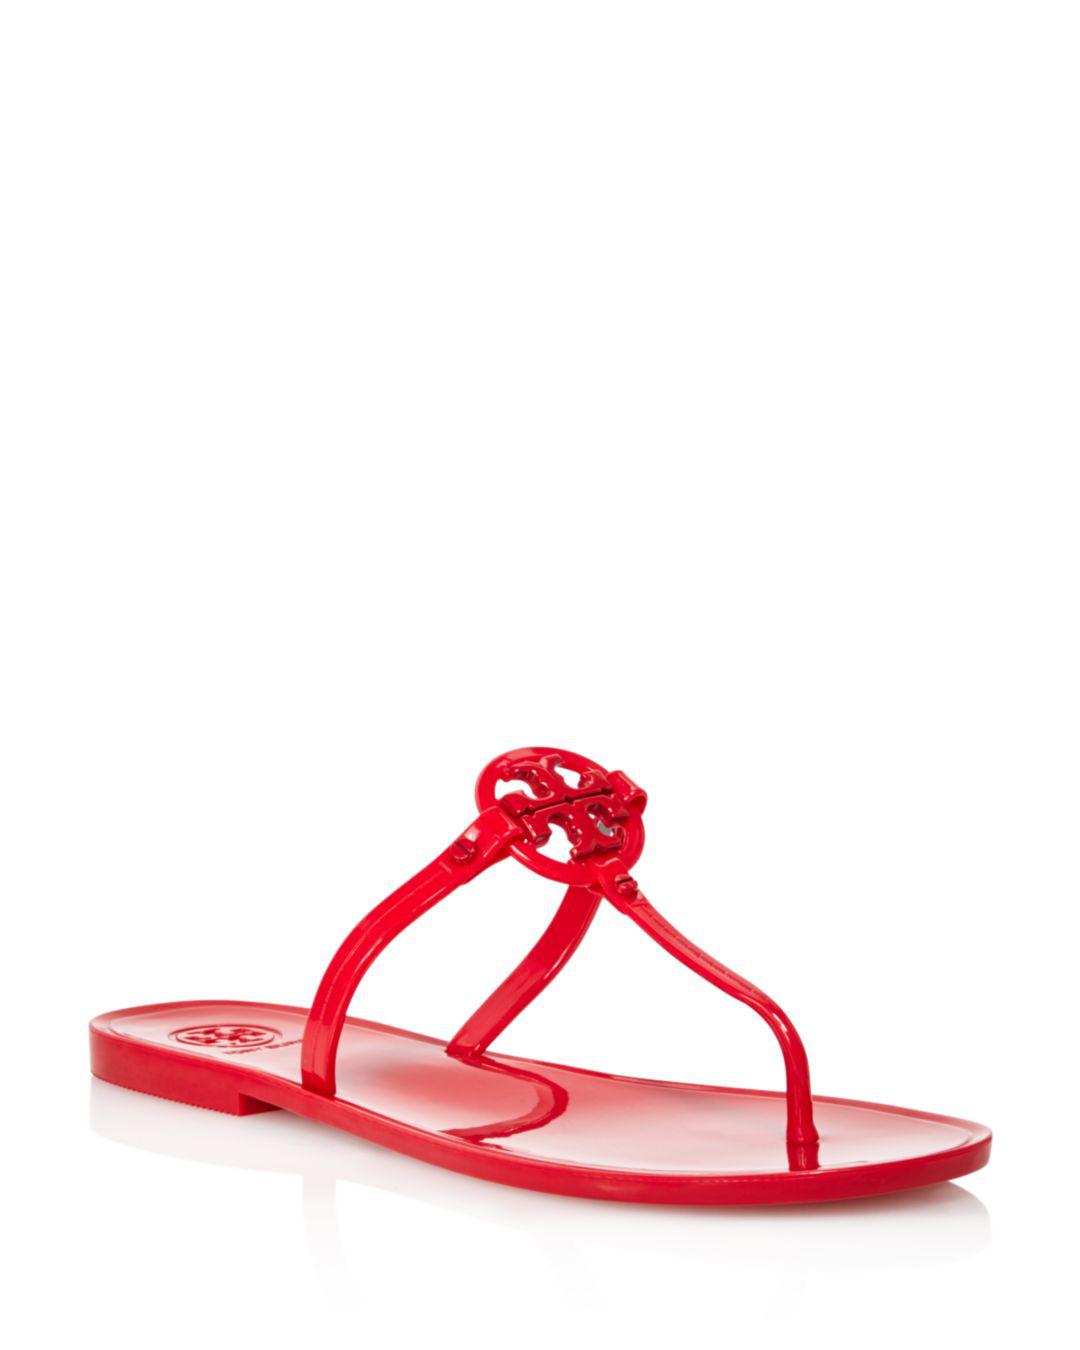 Tory Burch 'mini Miller' Flat Sandal in Red - Lyst